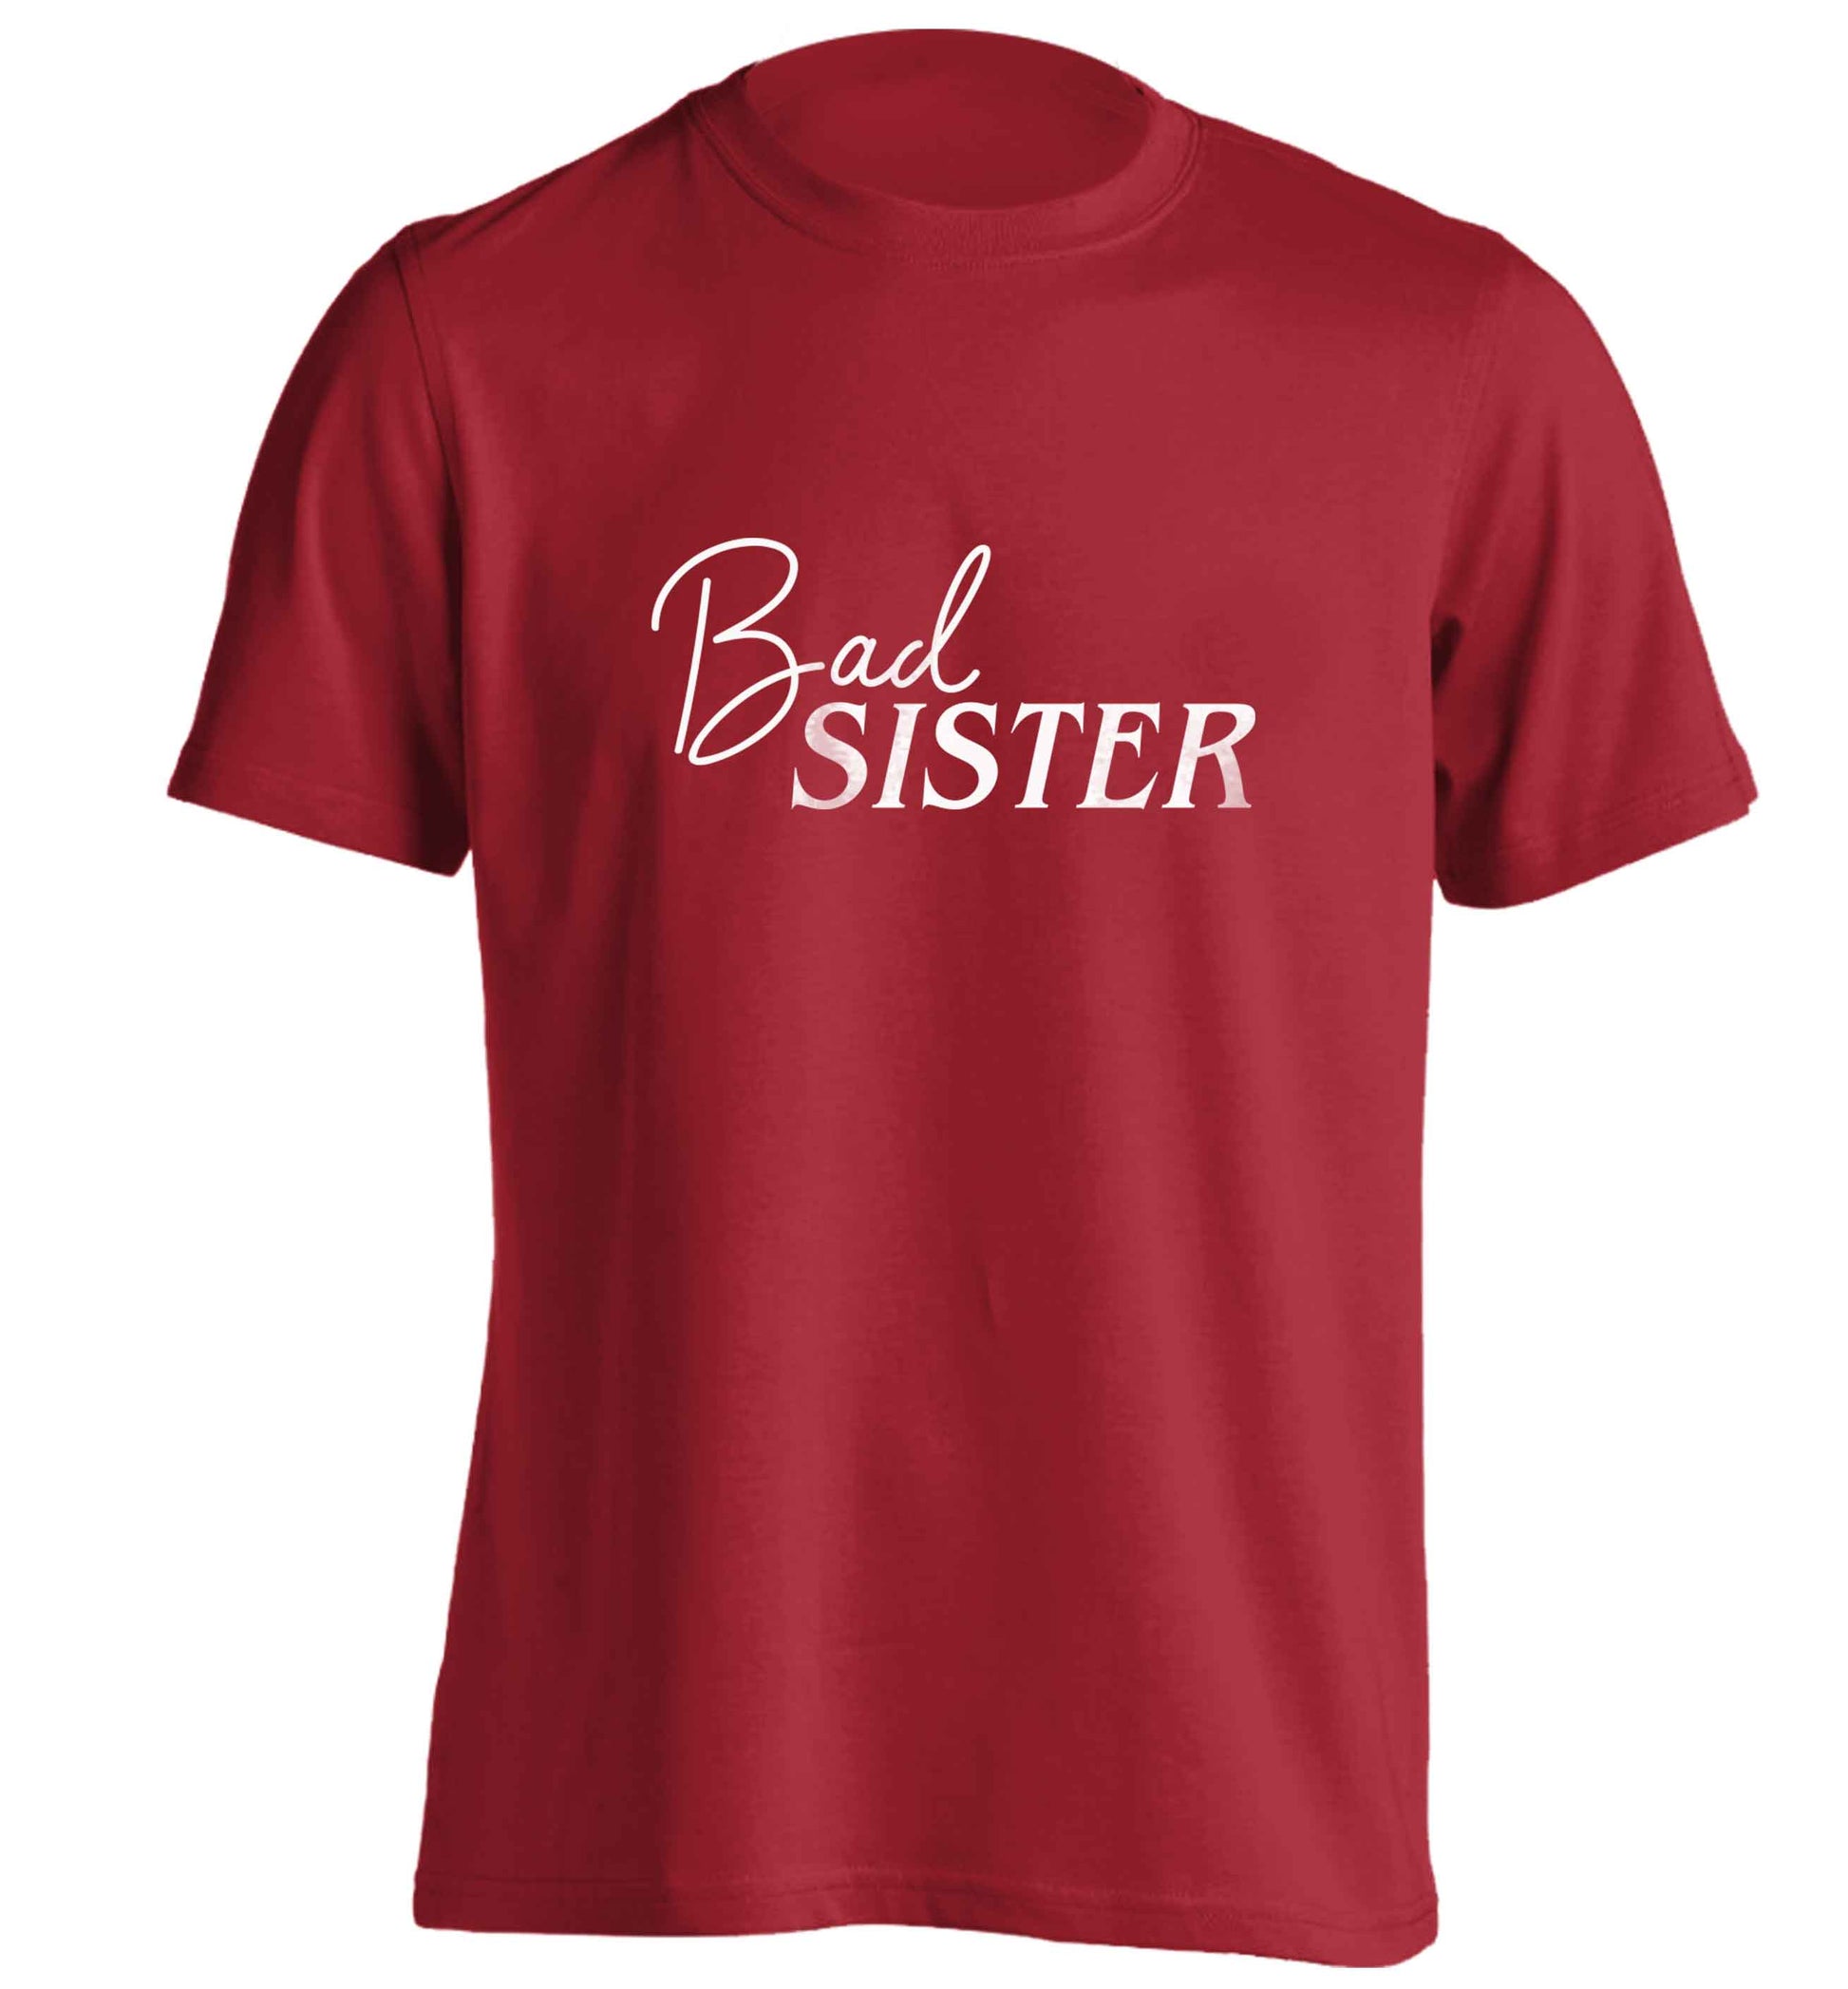 Bad sister adults unisex red Tshirt 2XL